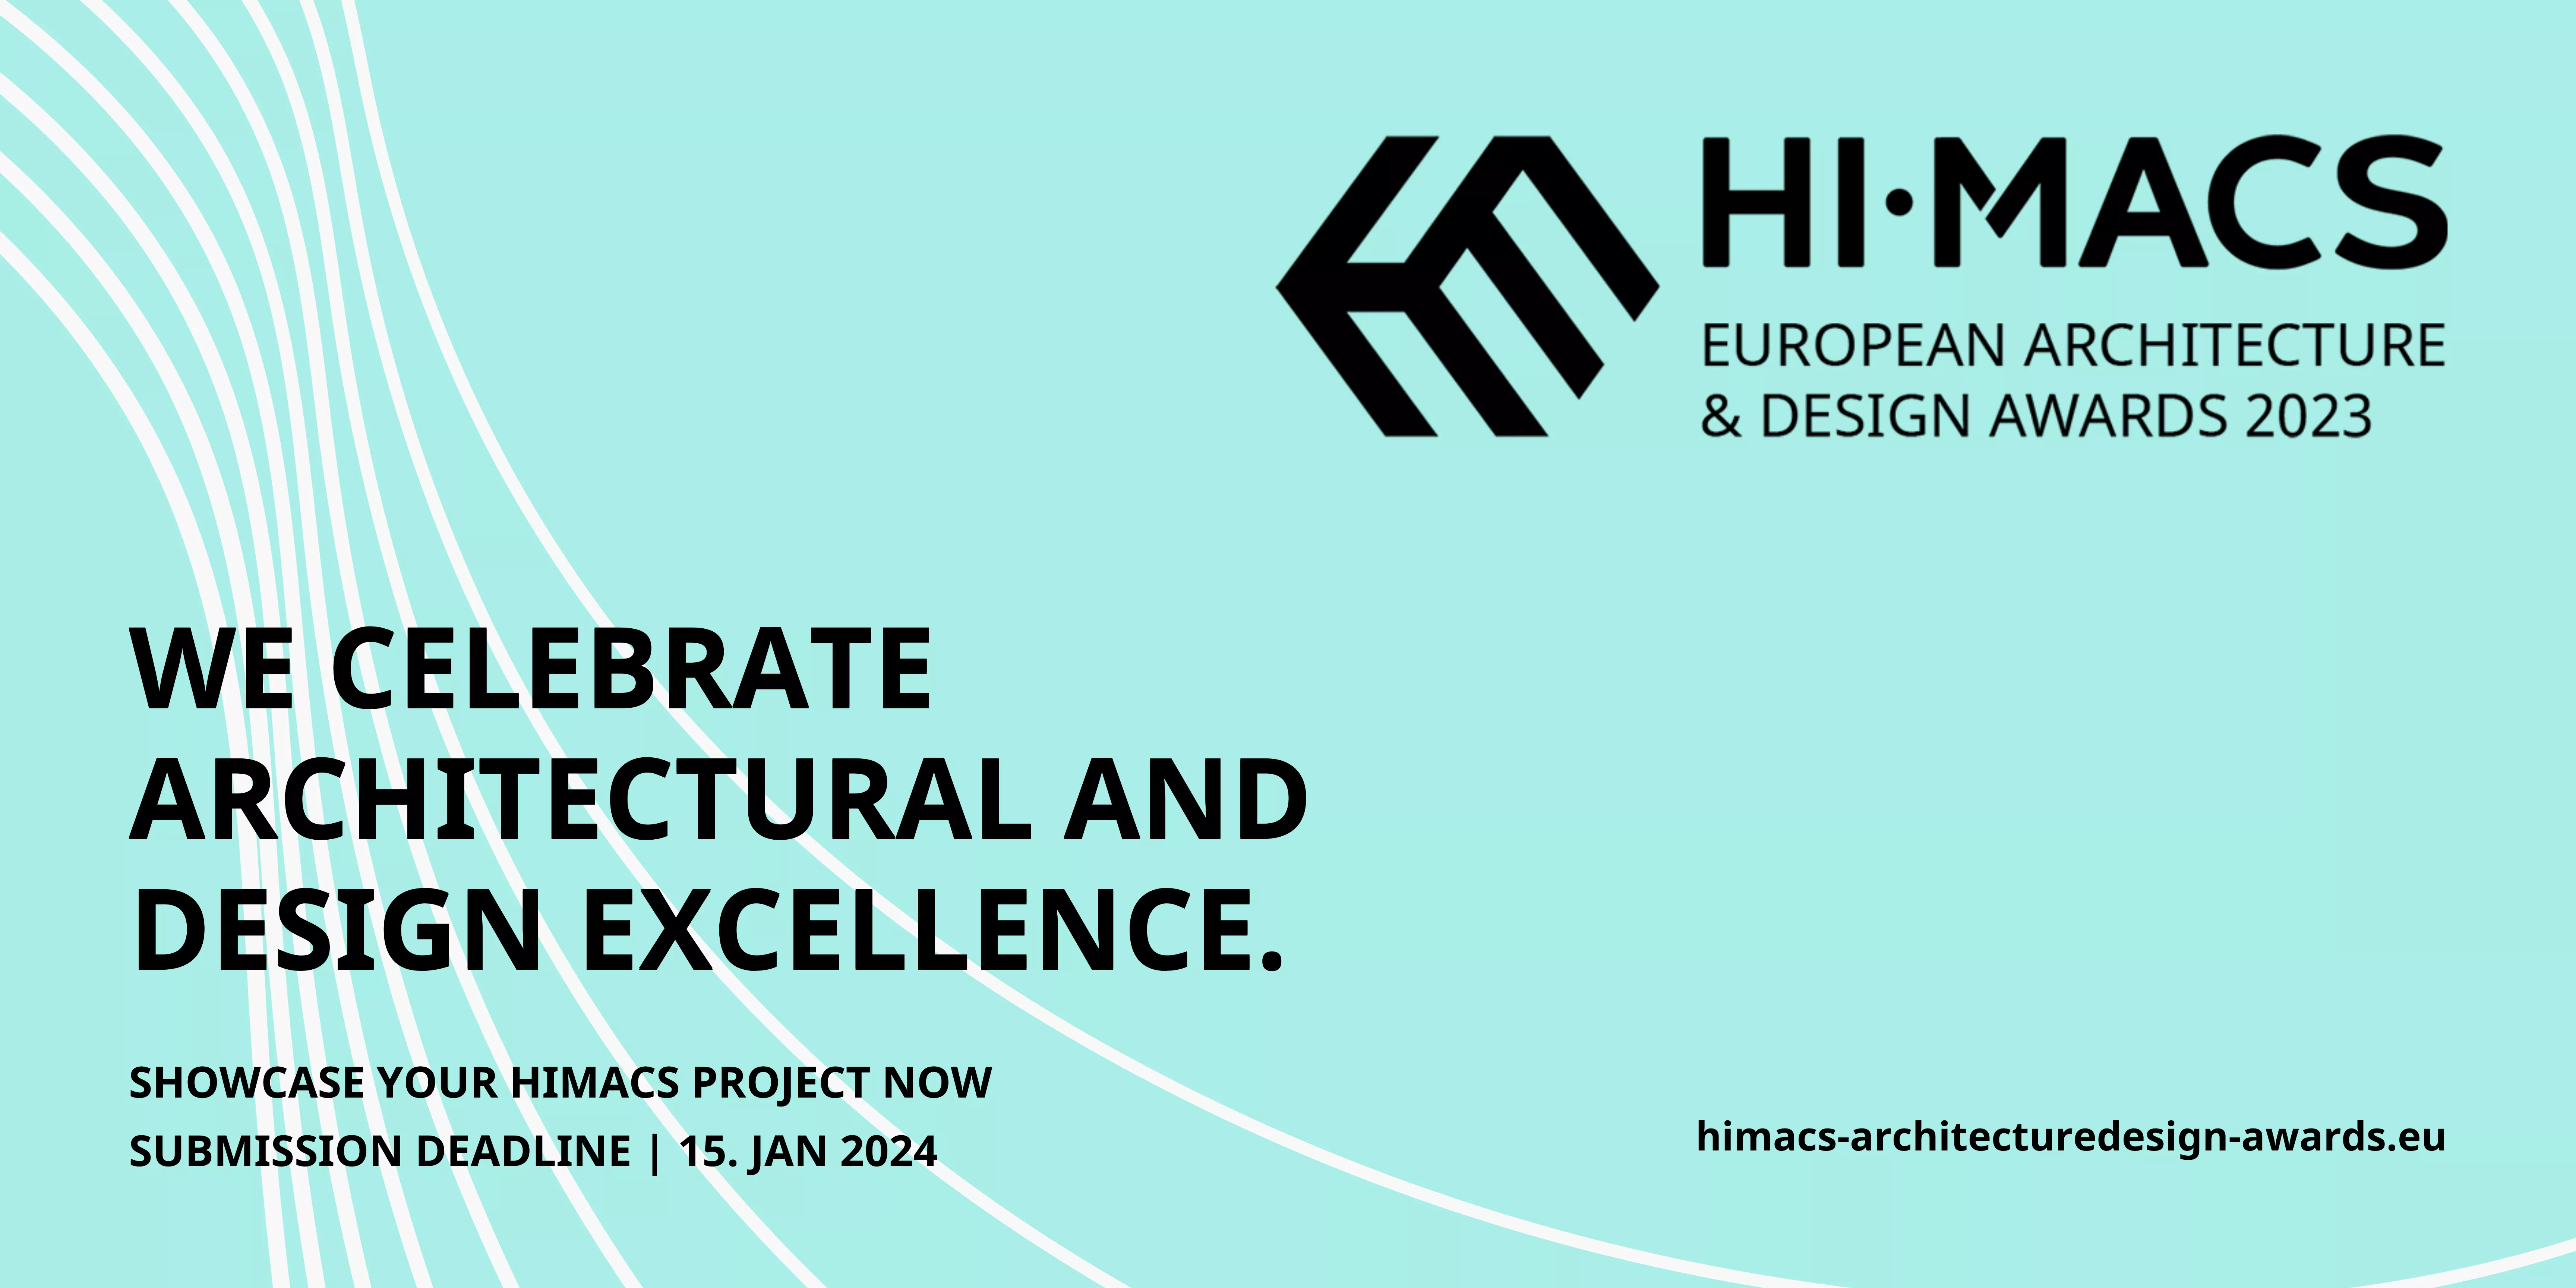 HIMACS presents the  European Architecture & Design Awards 2023